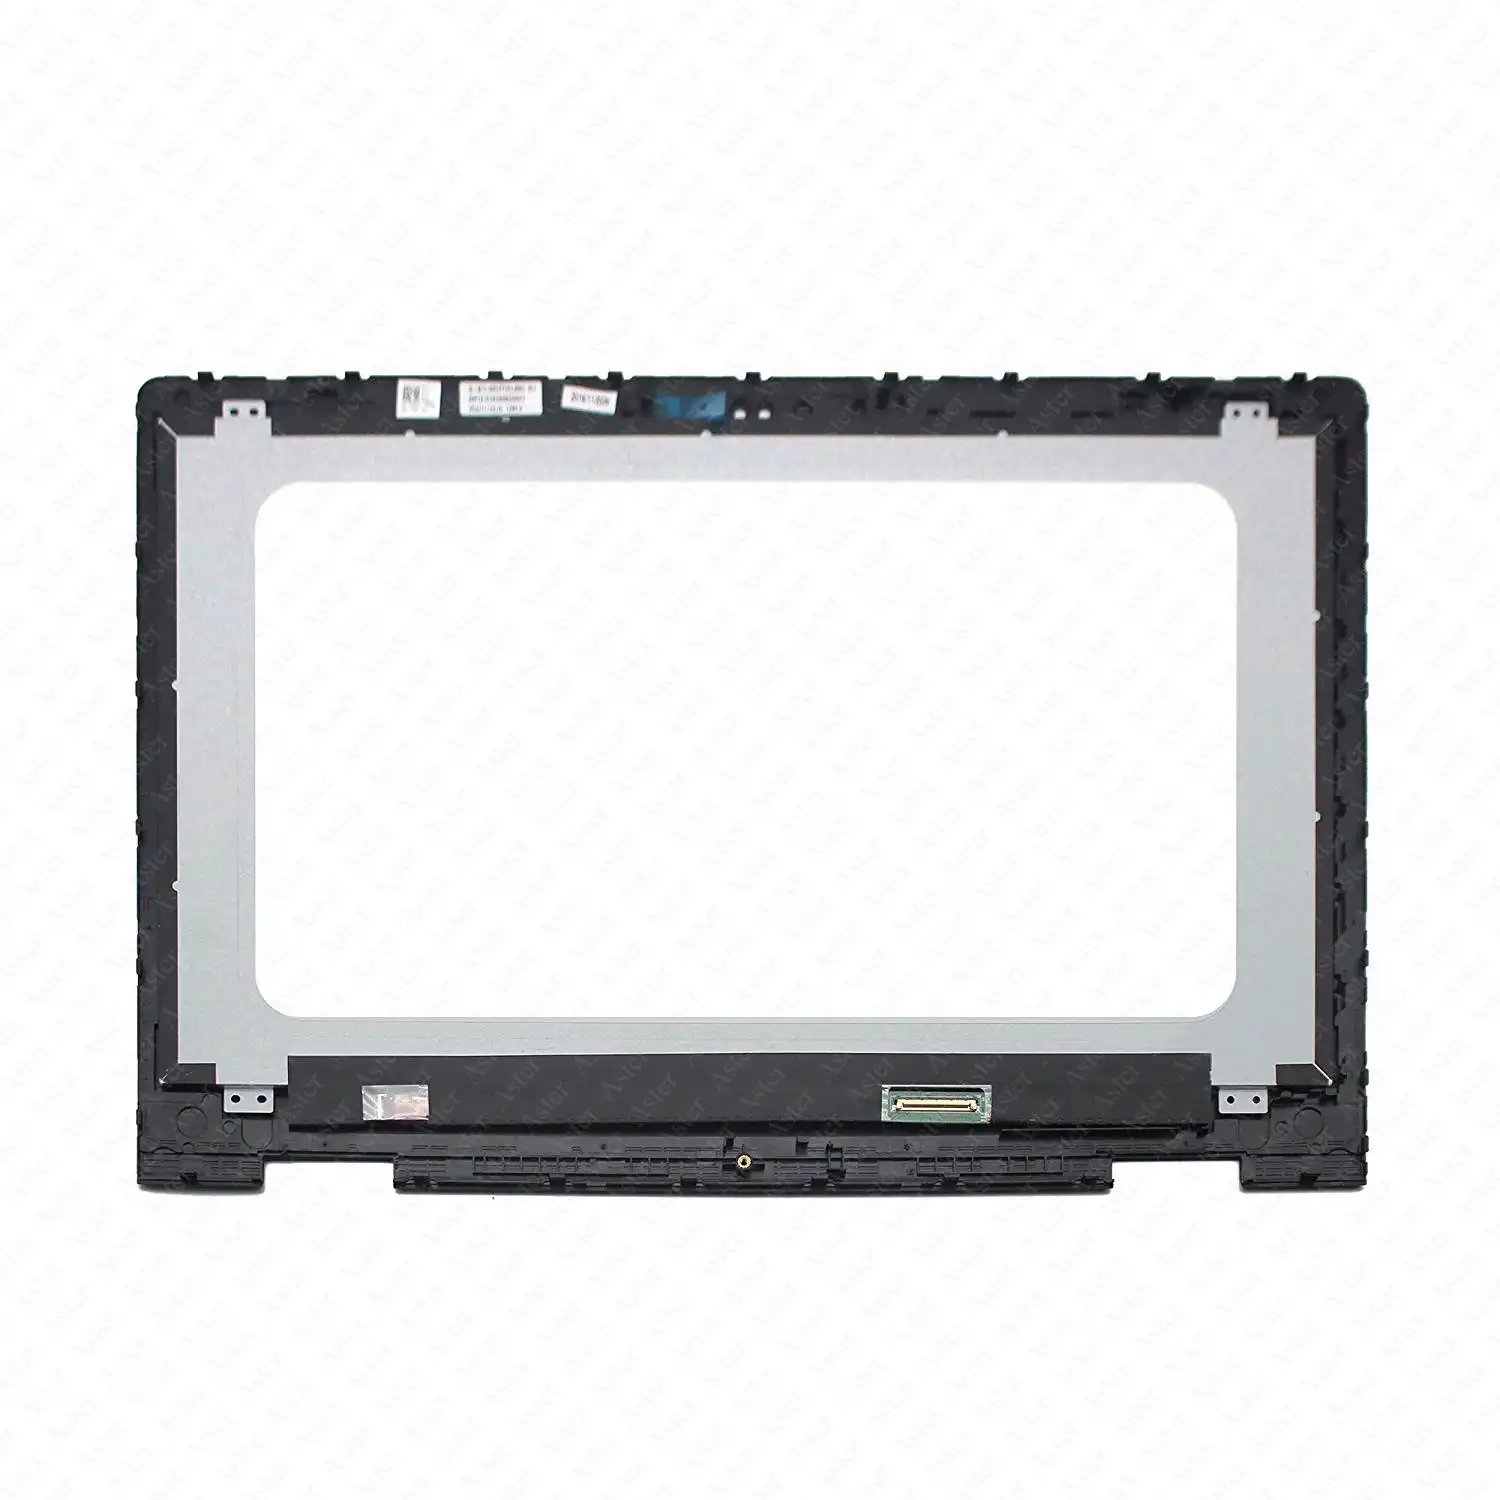 15,6 "LED LCD B156HAB01.0 сенсорный экран дигитайзер дисплей в сборе с рамкой для Dell Inspiron 15 5568 5578 5569 5579 1920x1080